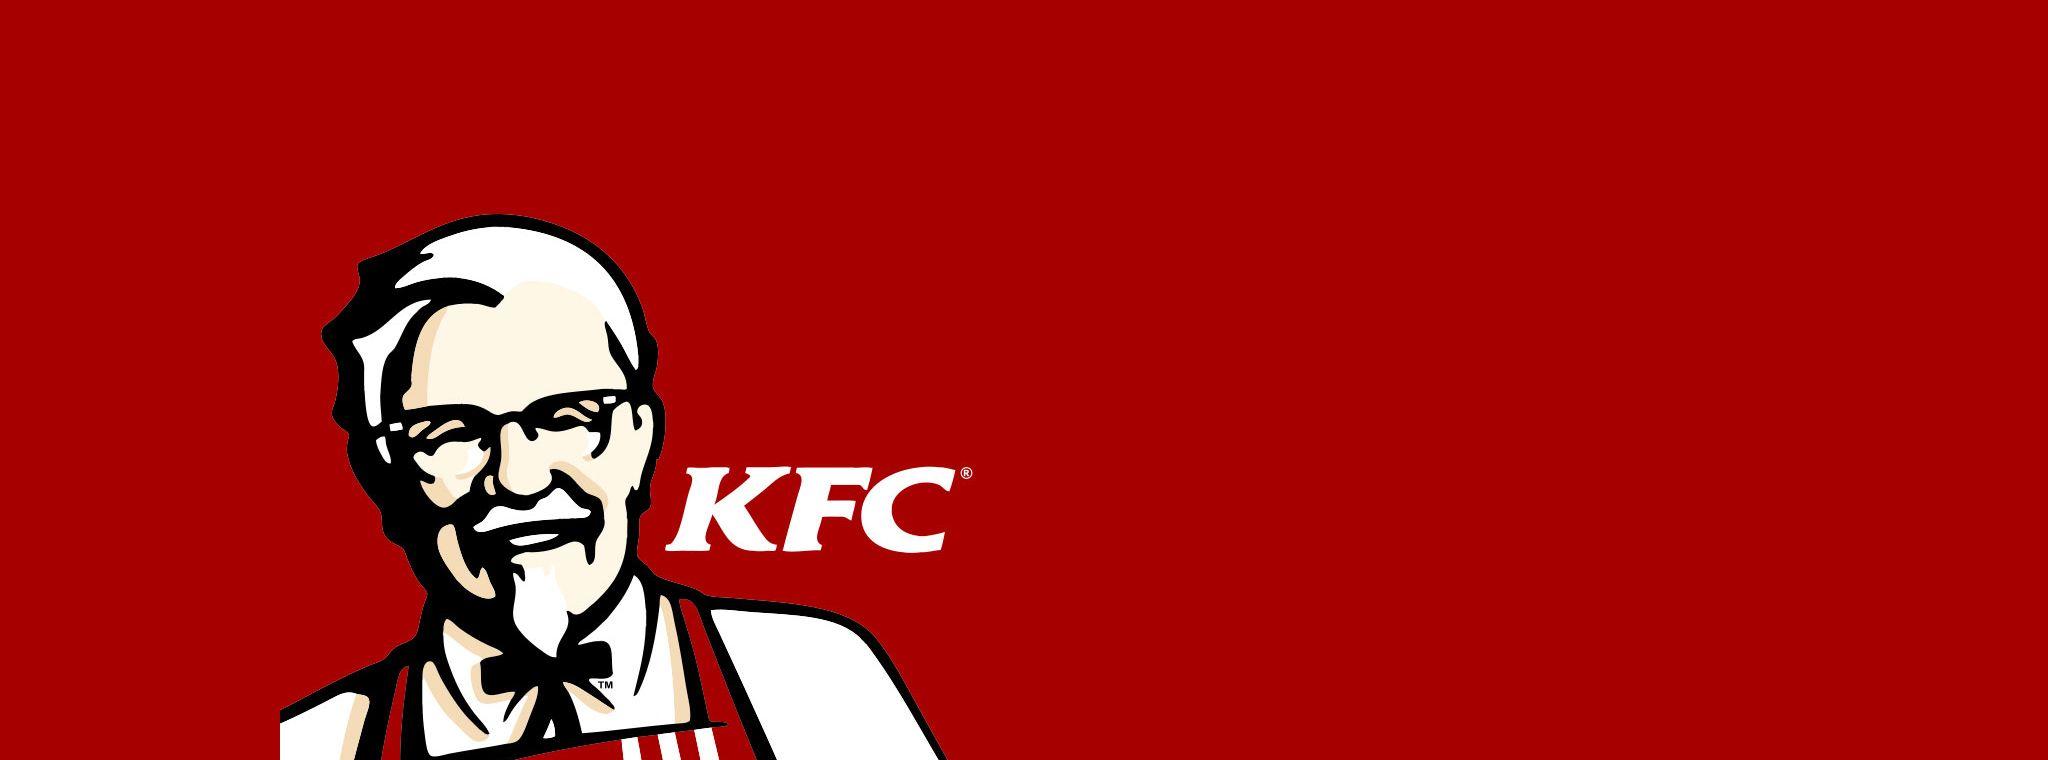 KFC Wallpaper